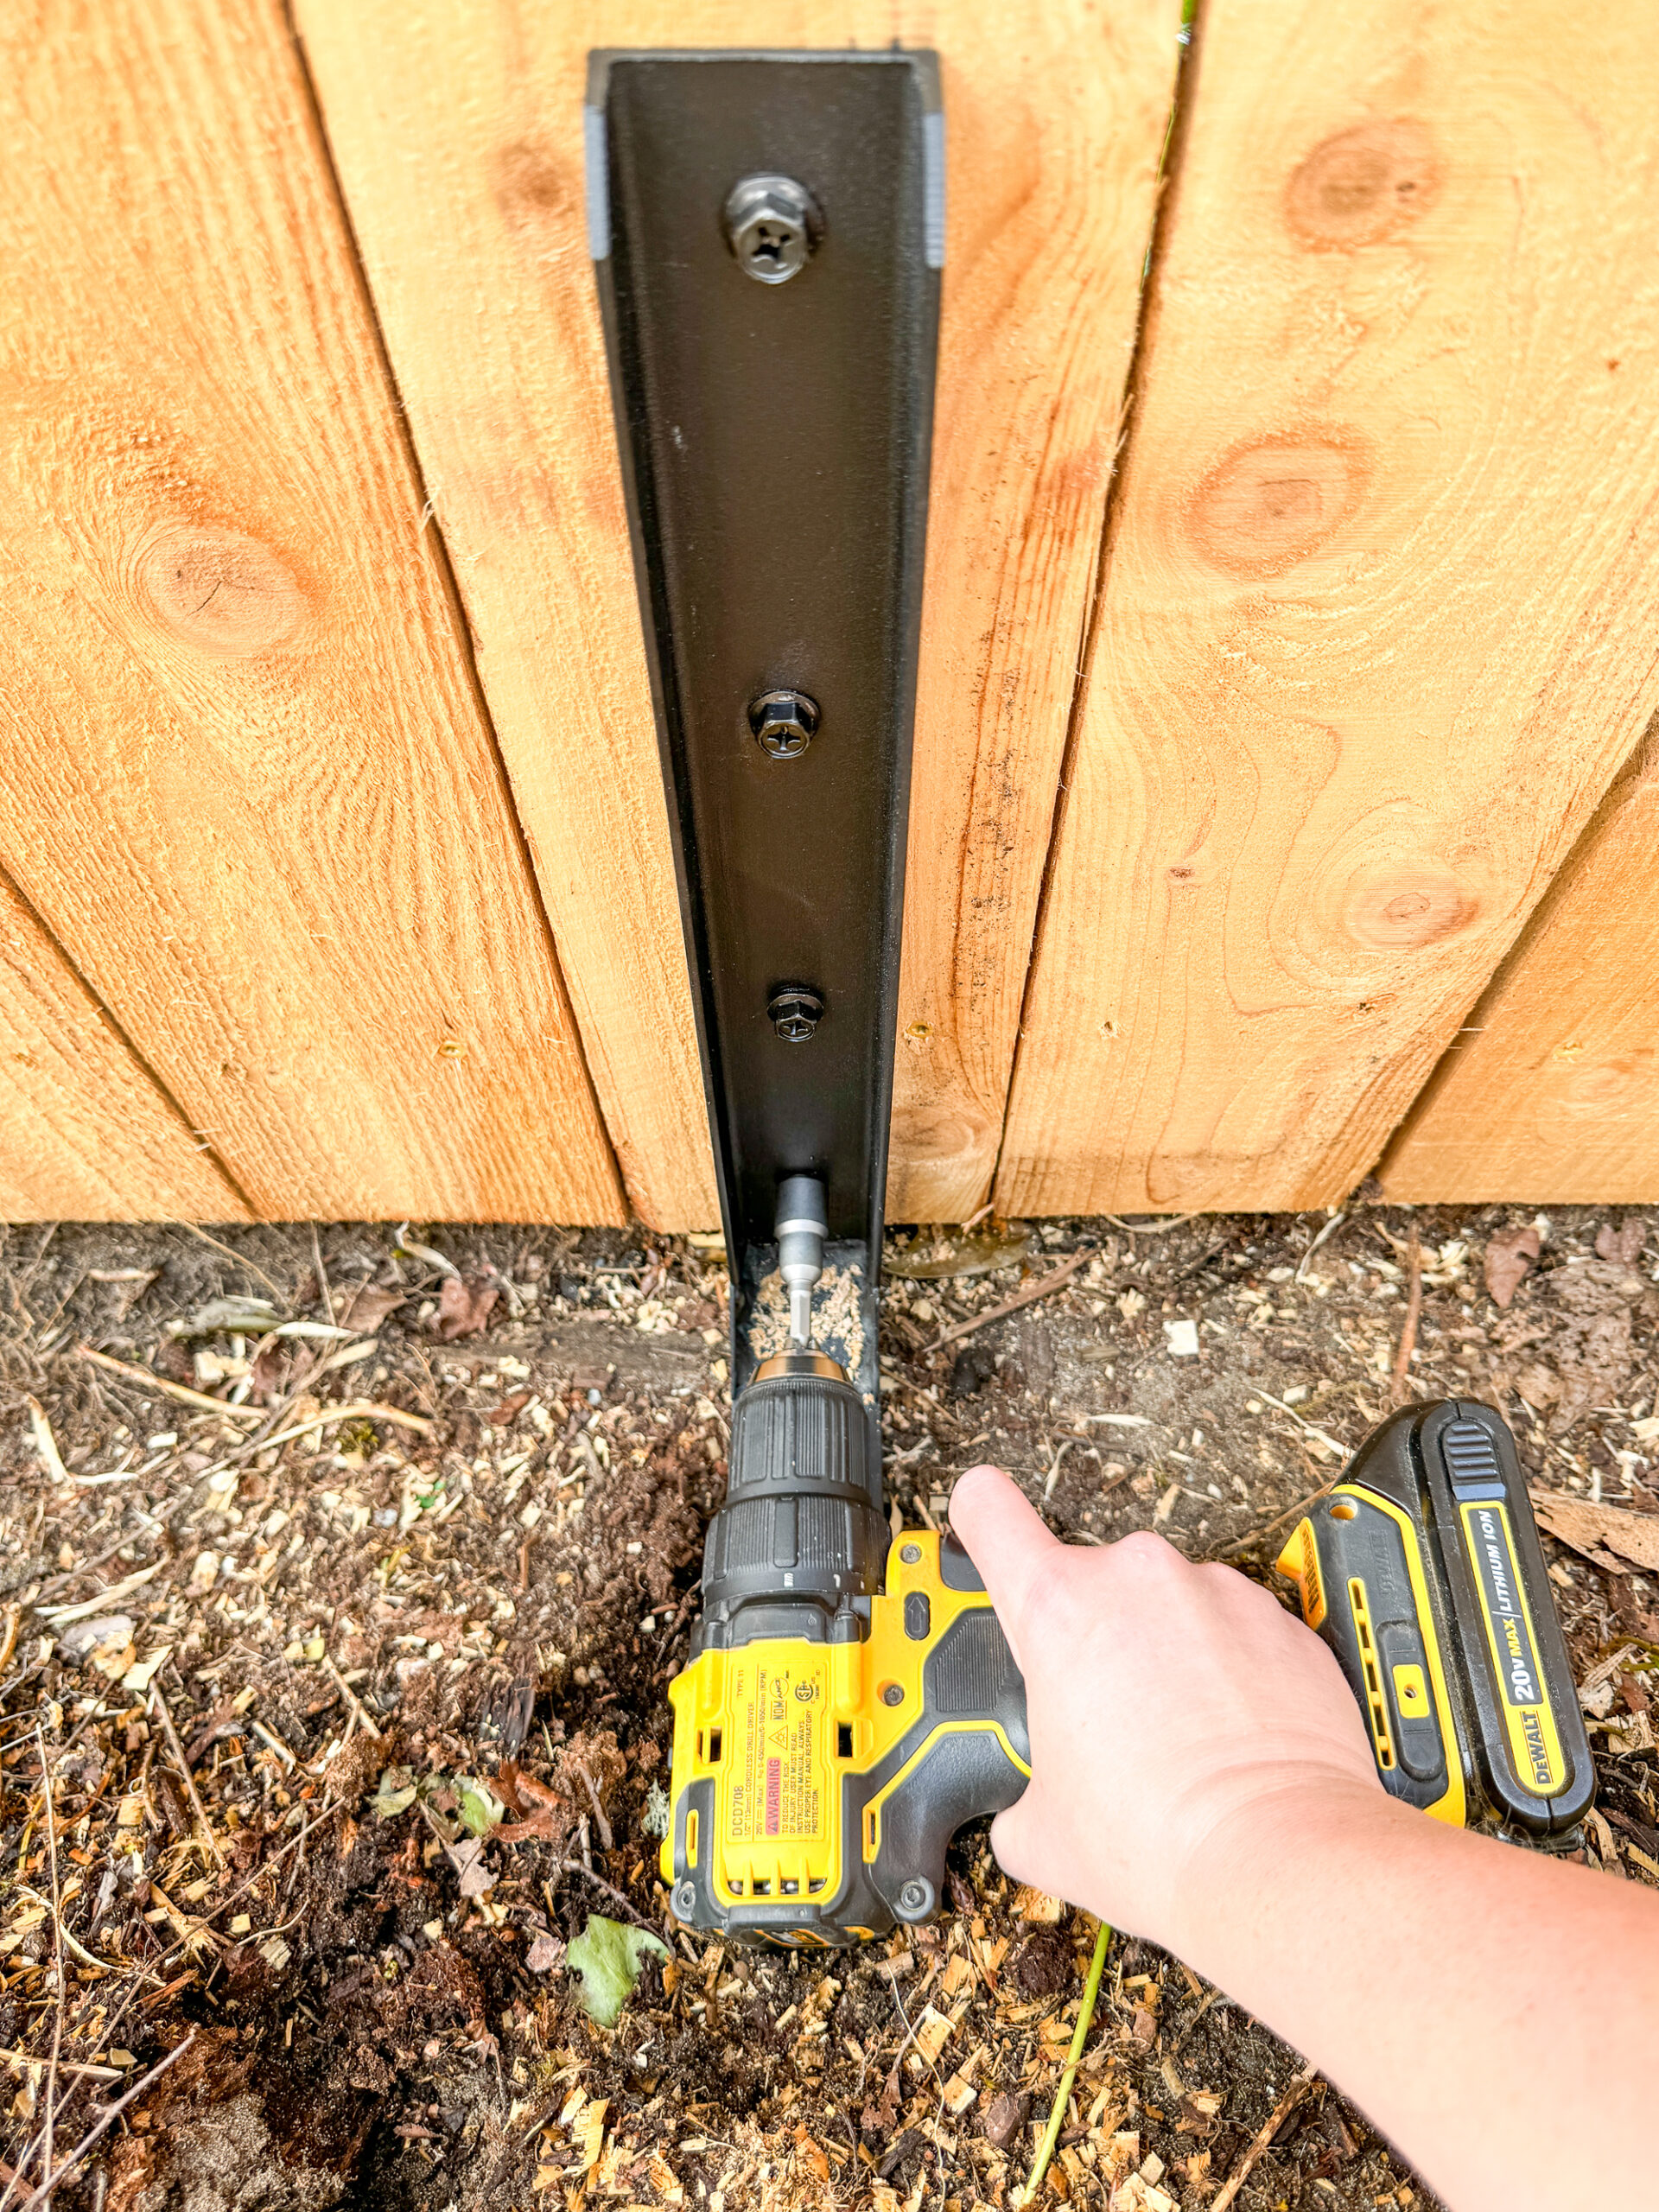 tightening bolts on fence post repair bracket